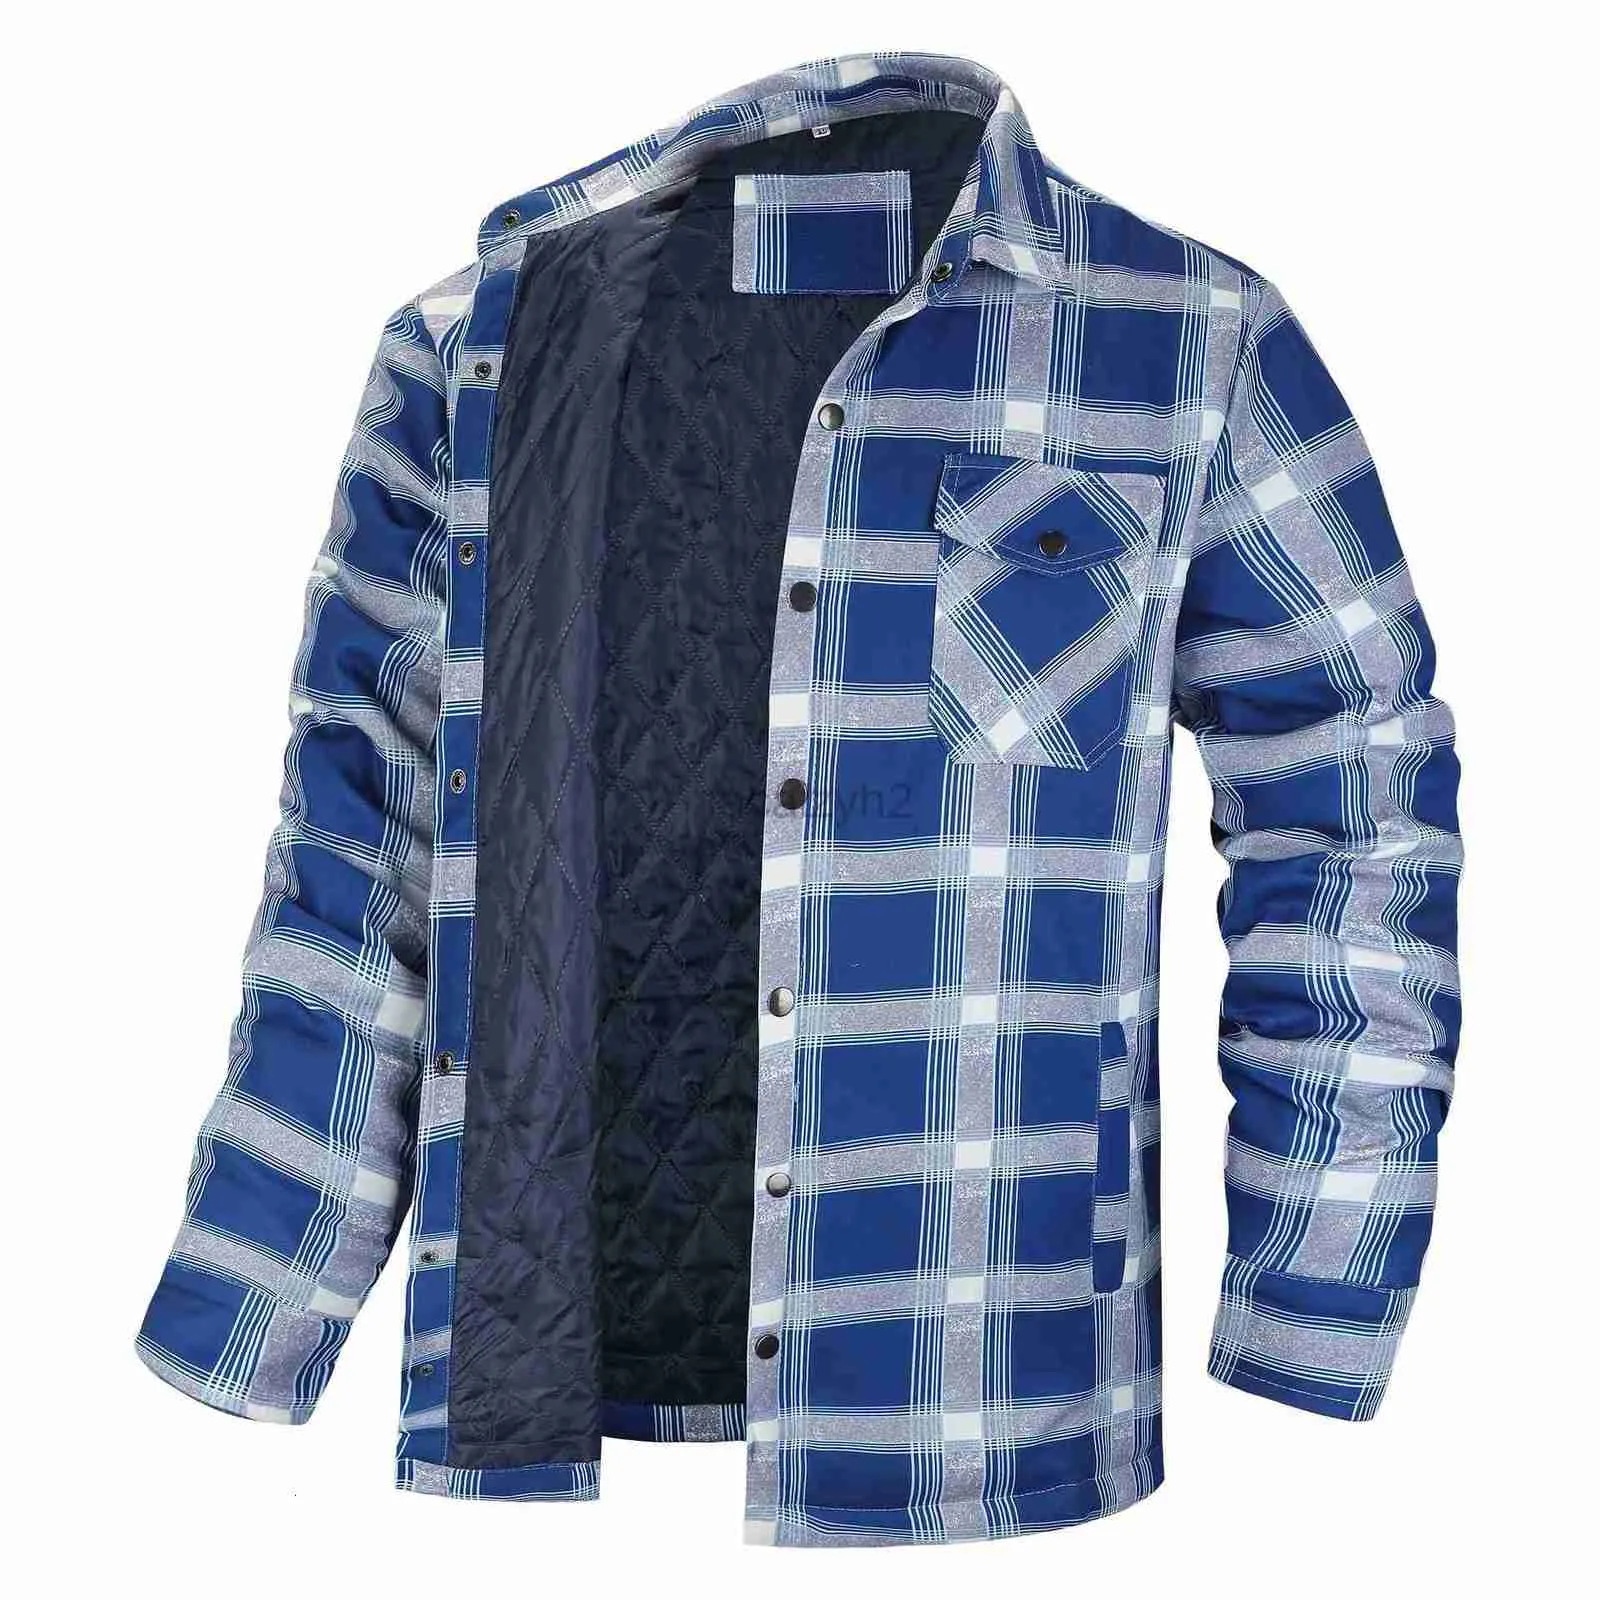 men's Jackets designer Coats Men's jacket new long sleeved lapel plaid thickened shirt men's jacket men's Outerwear